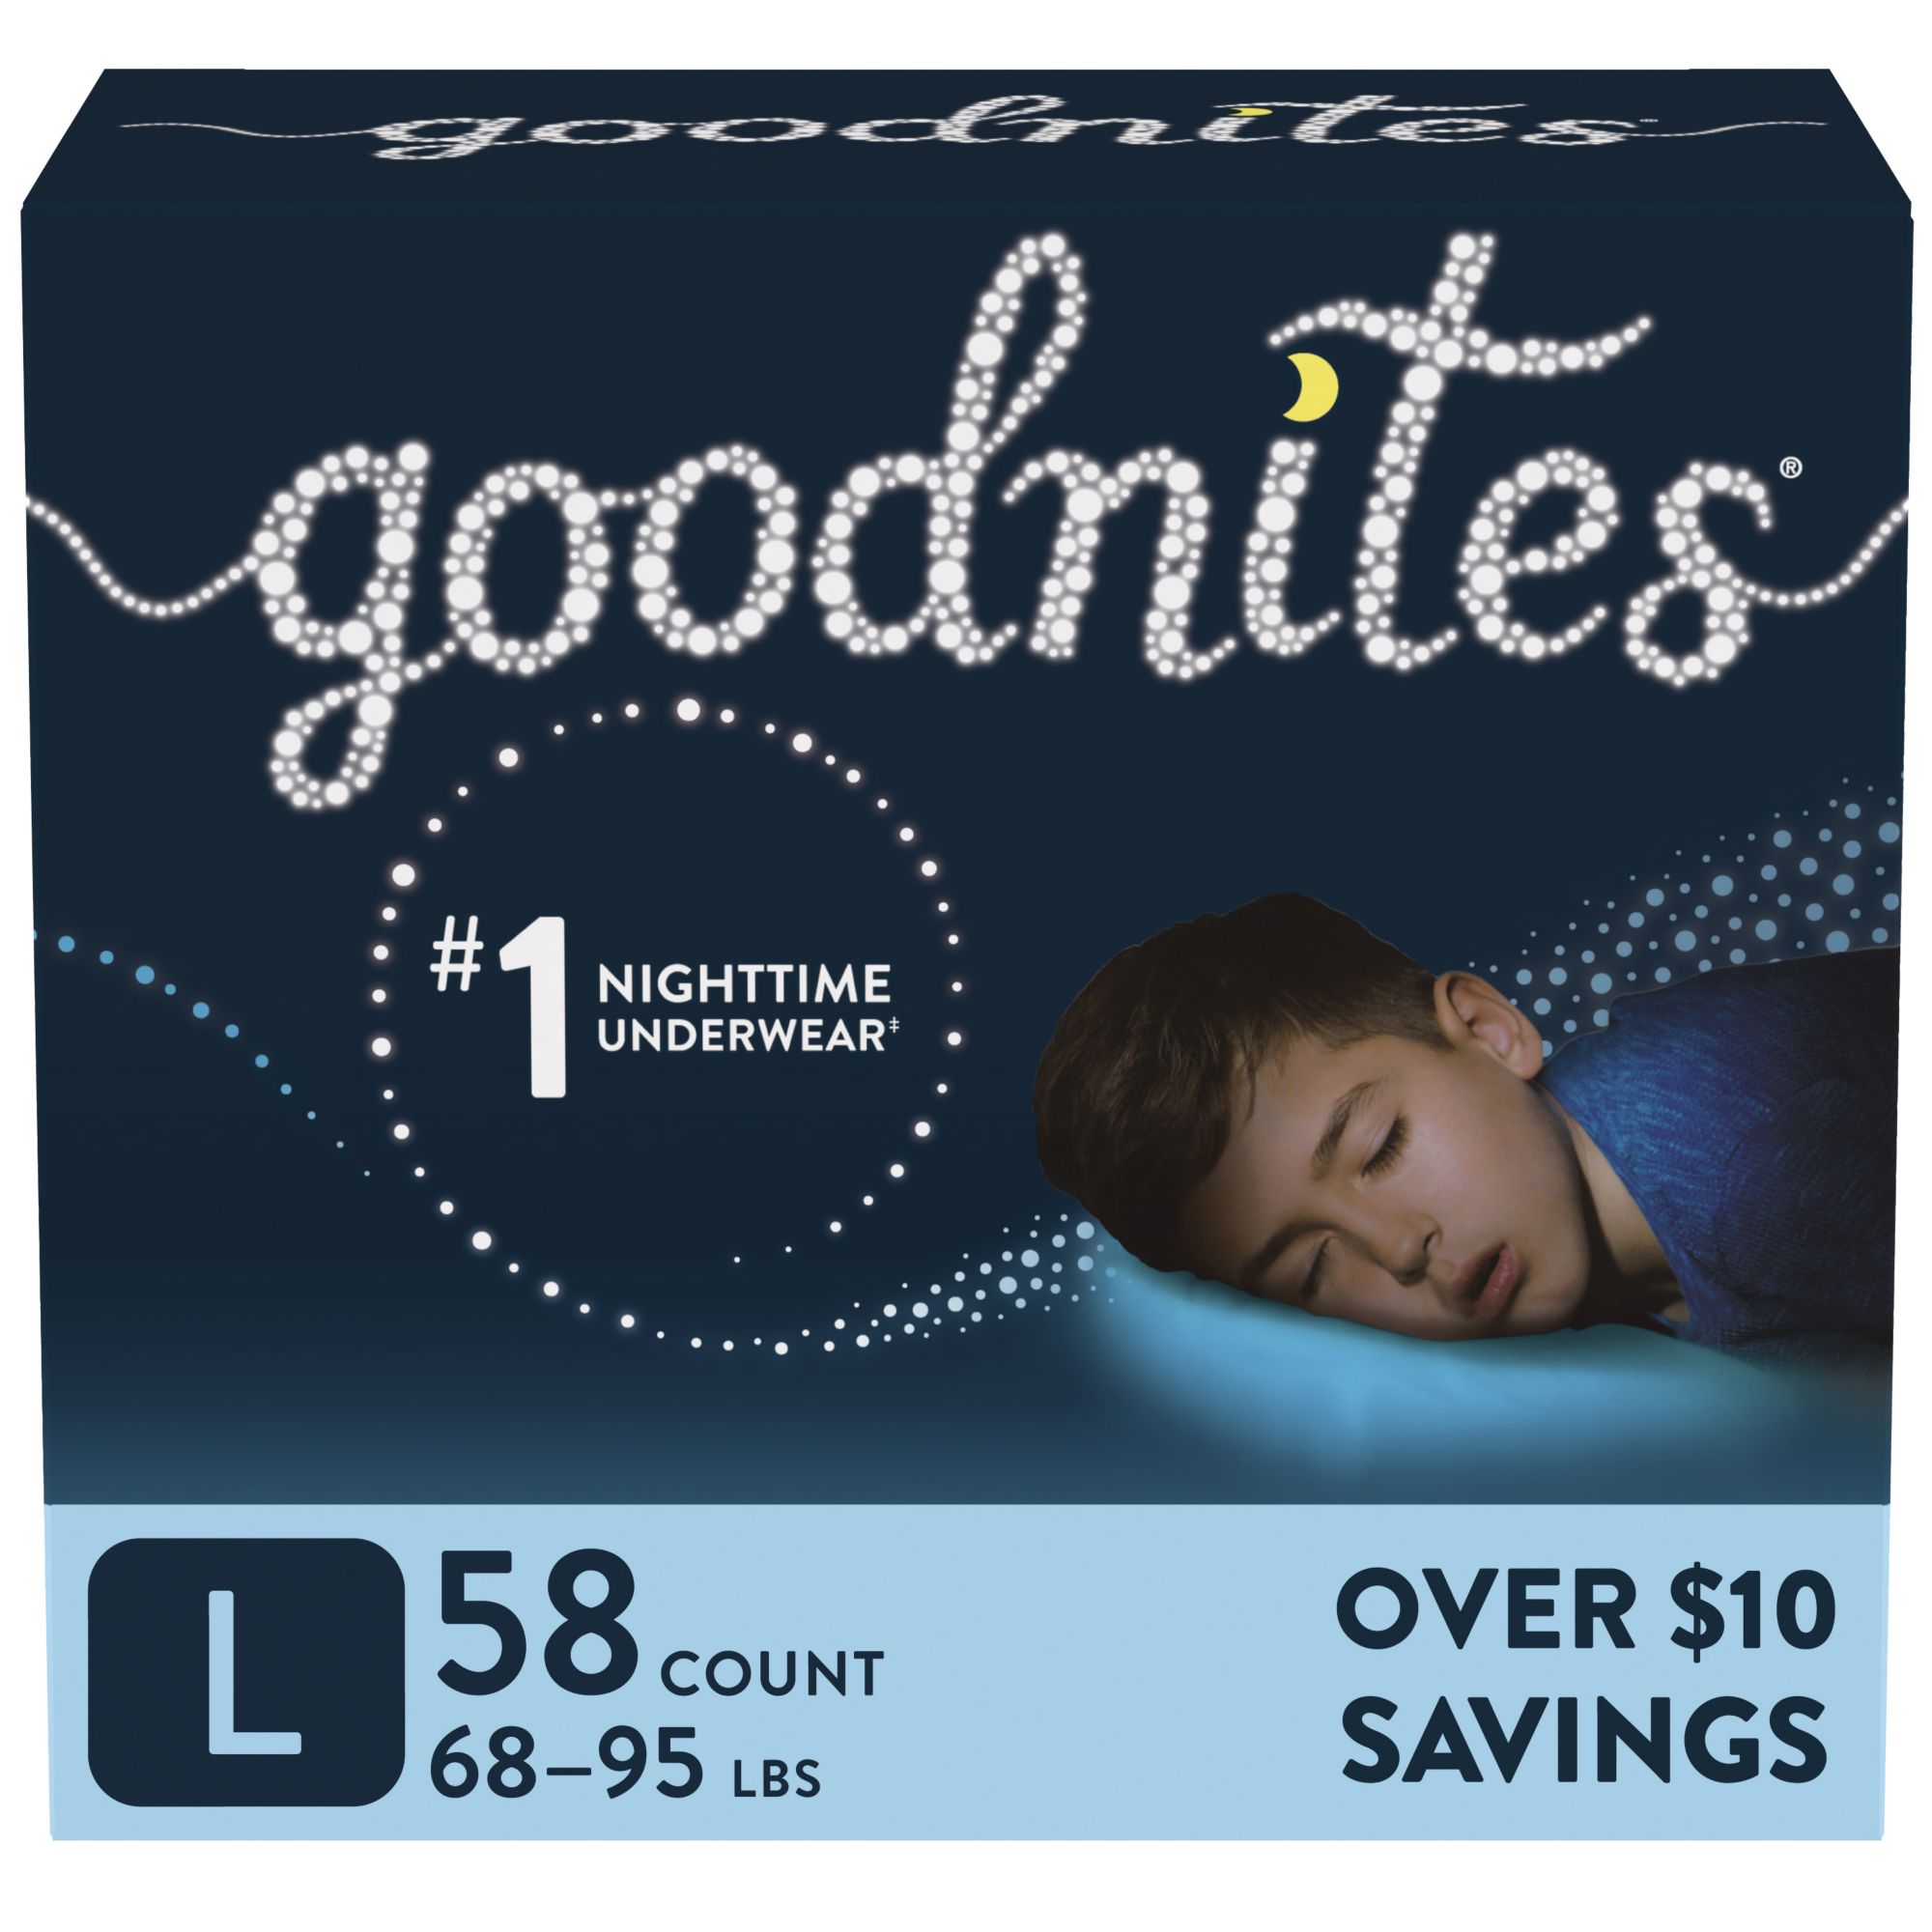 Ninjamas Nighttime Bedwetting Underwear for Boy (Select Size